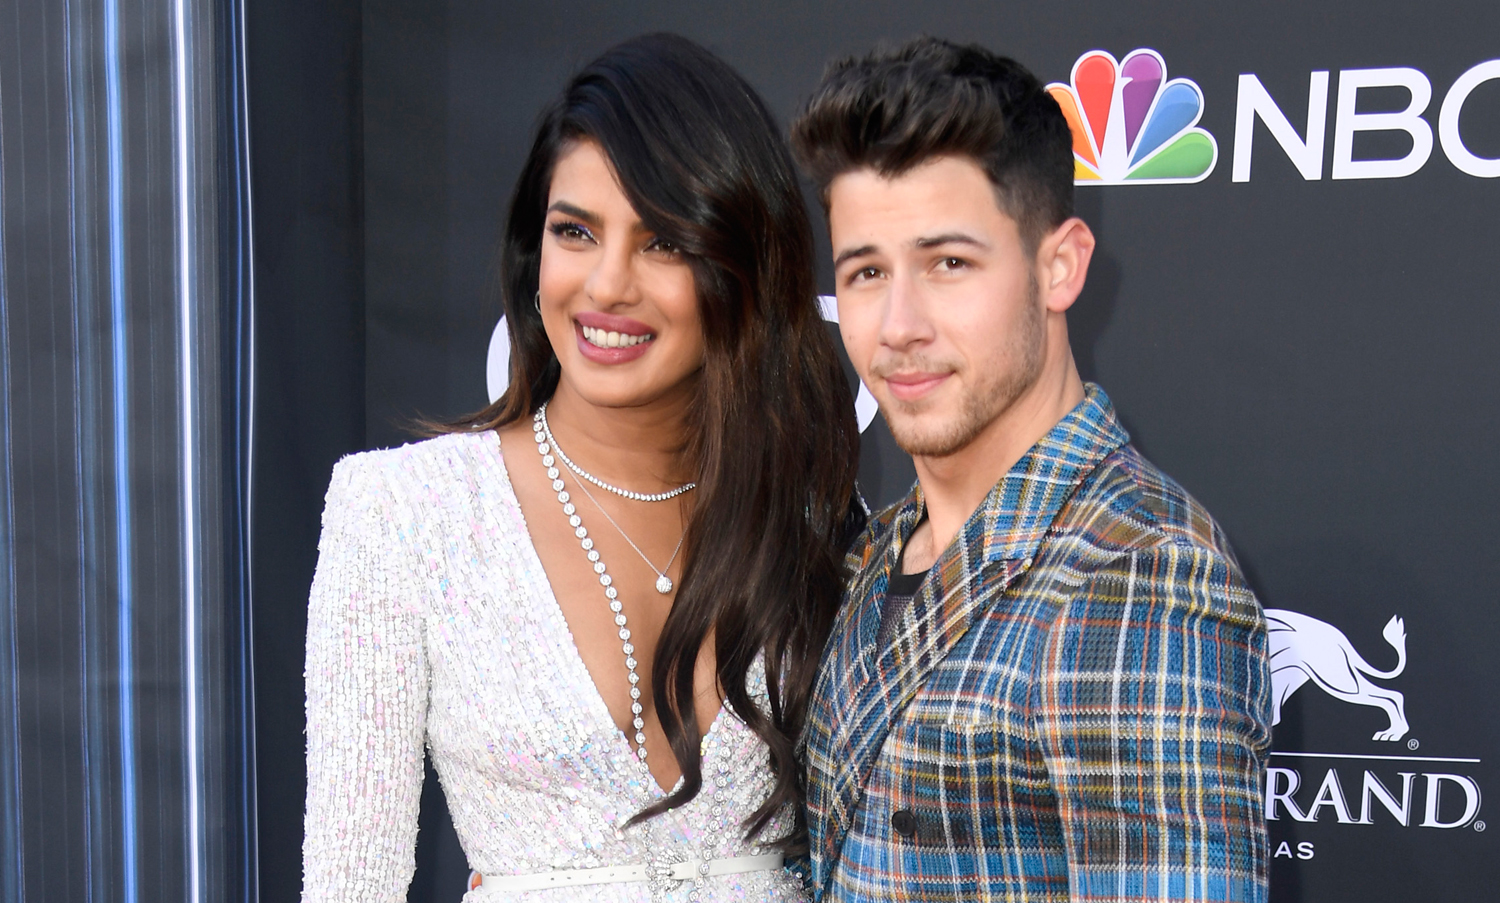 Priyanka Chopra Sparkled In White Gown On Red Carpet Alongside Nick Jonas At Billboard Awards